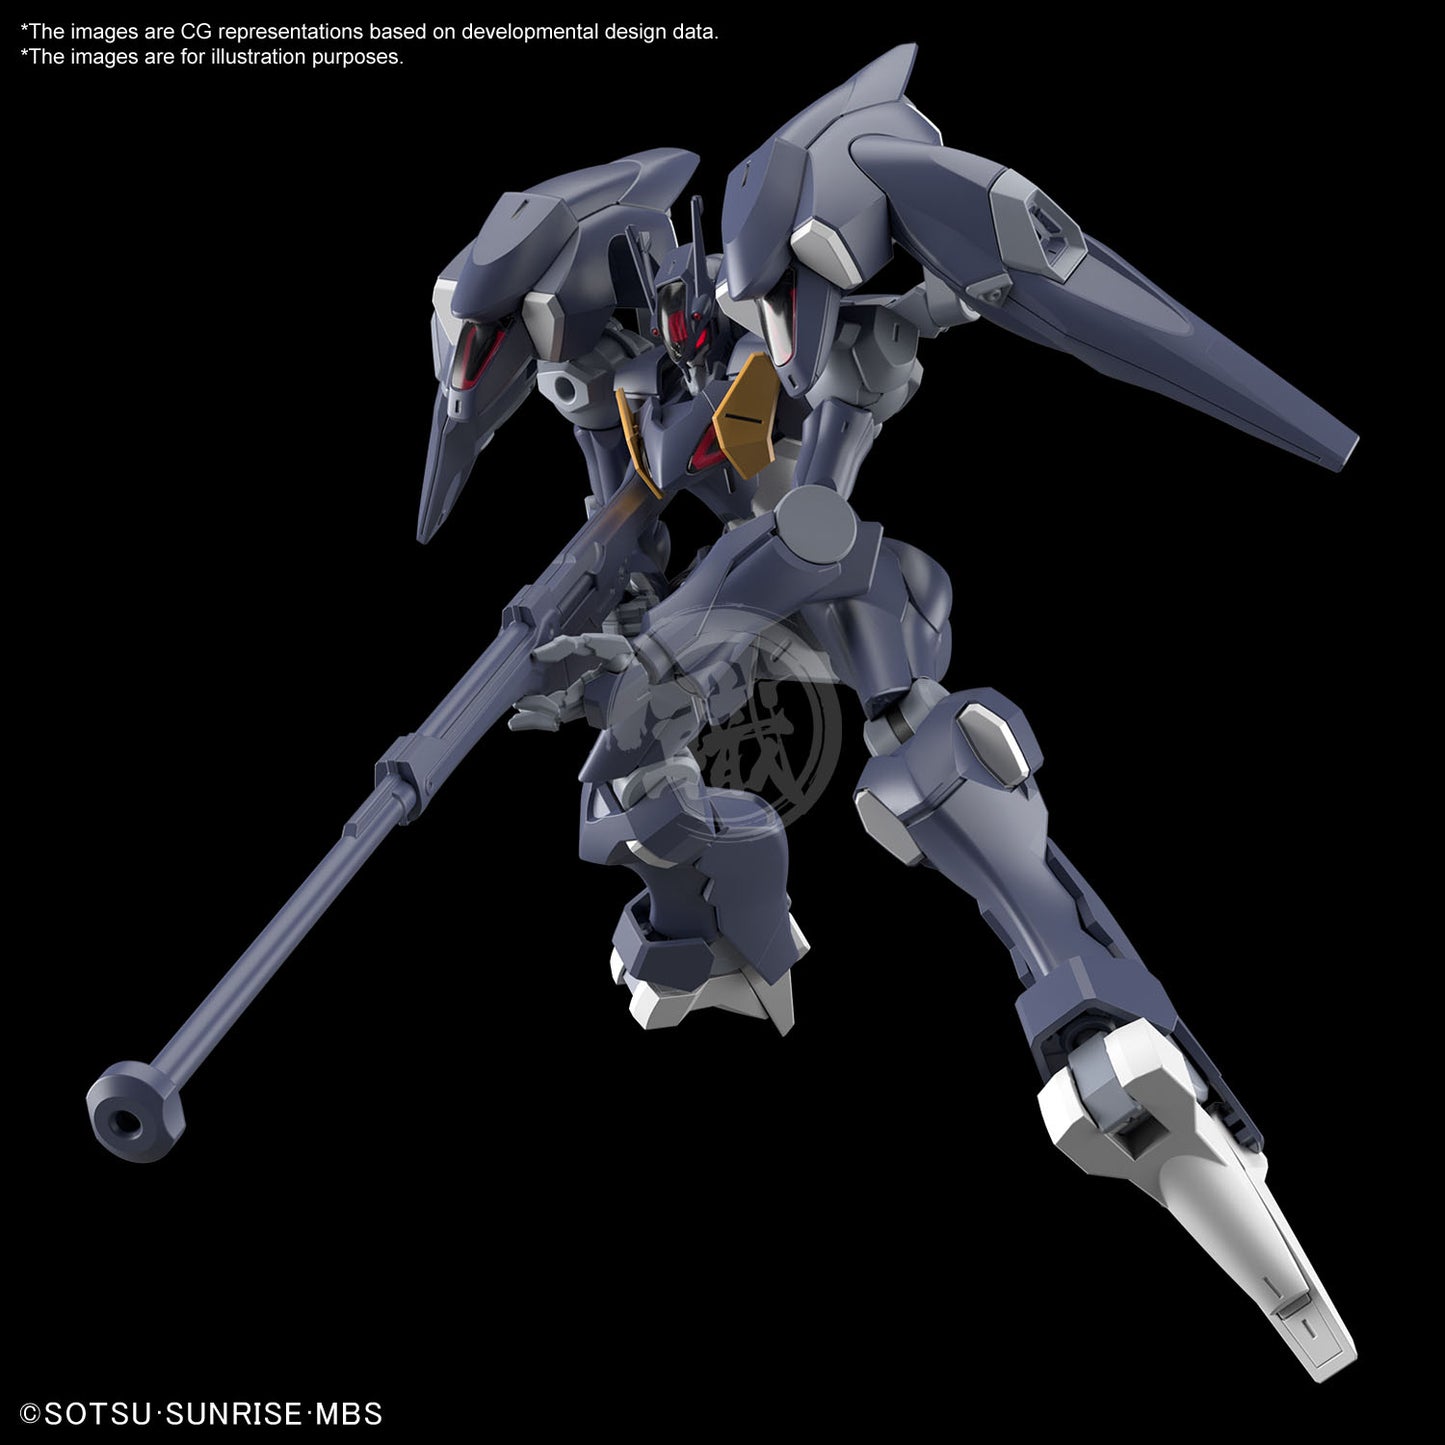 HG Gundam Pharact - ShokuninGunpla